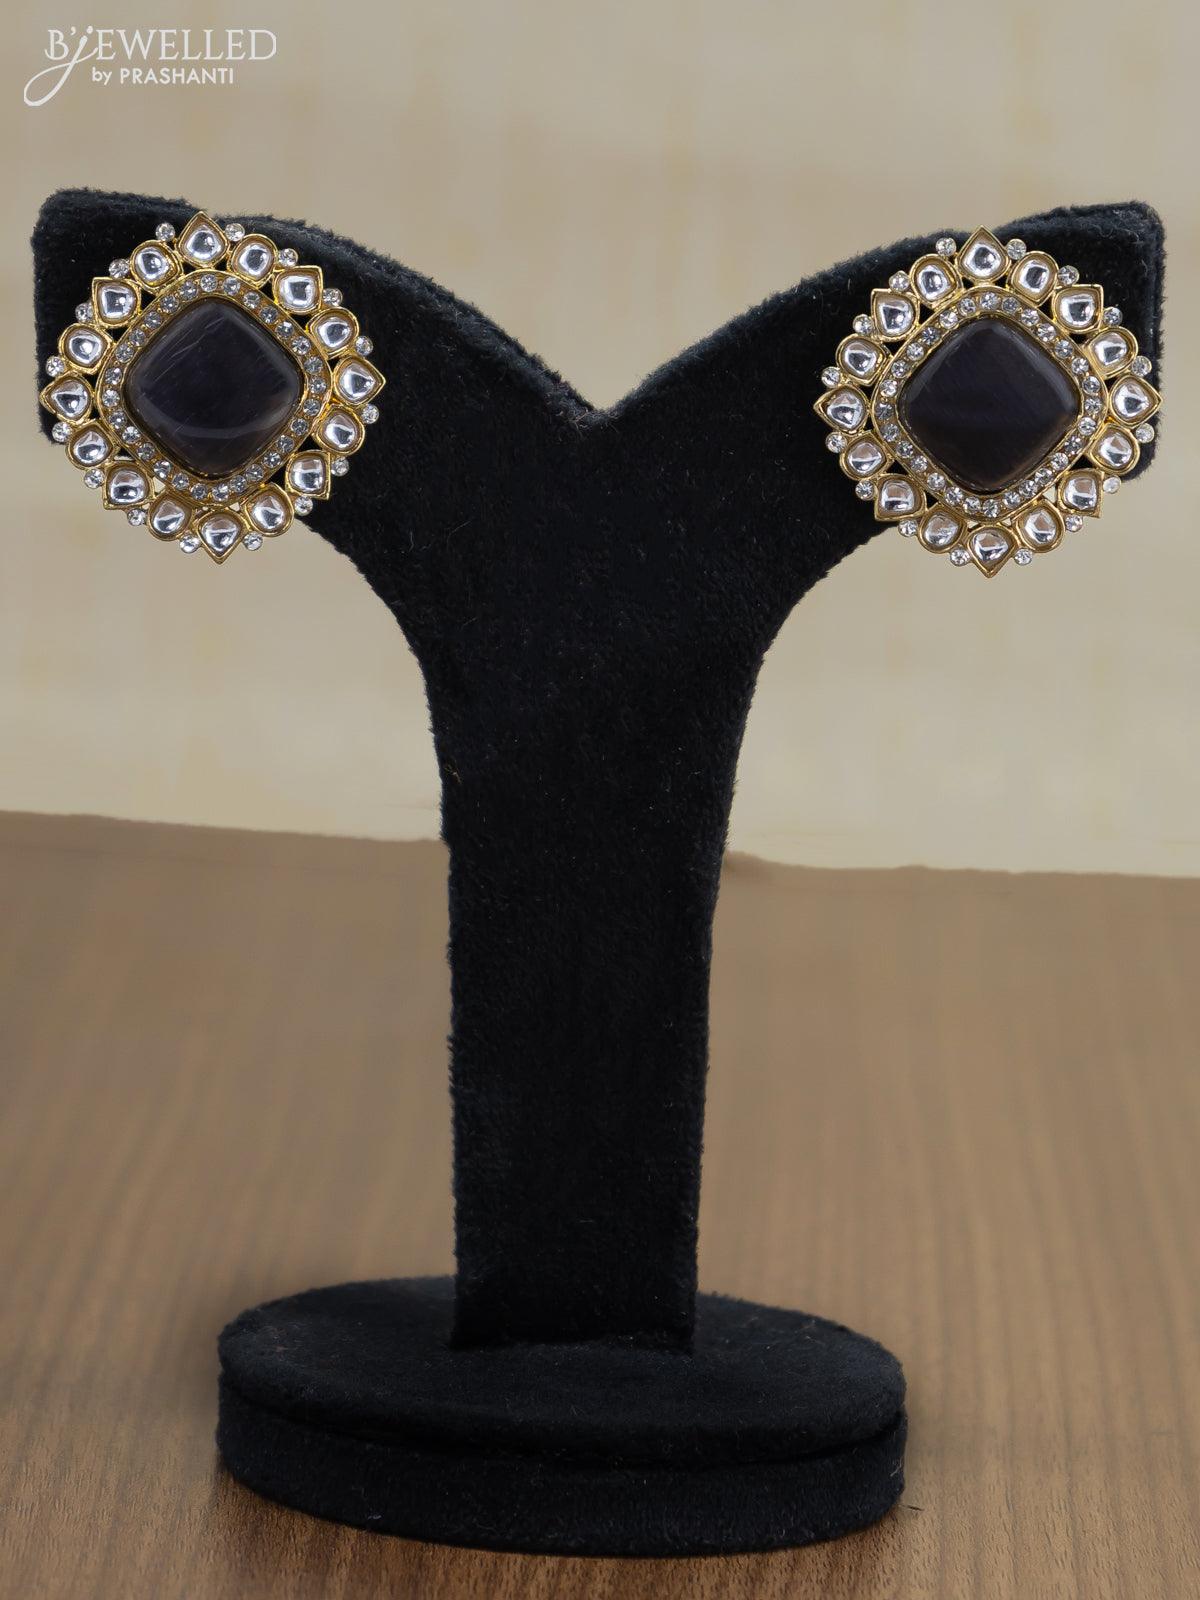 light weight earrings with cz and grey stone prashanti sarees 1